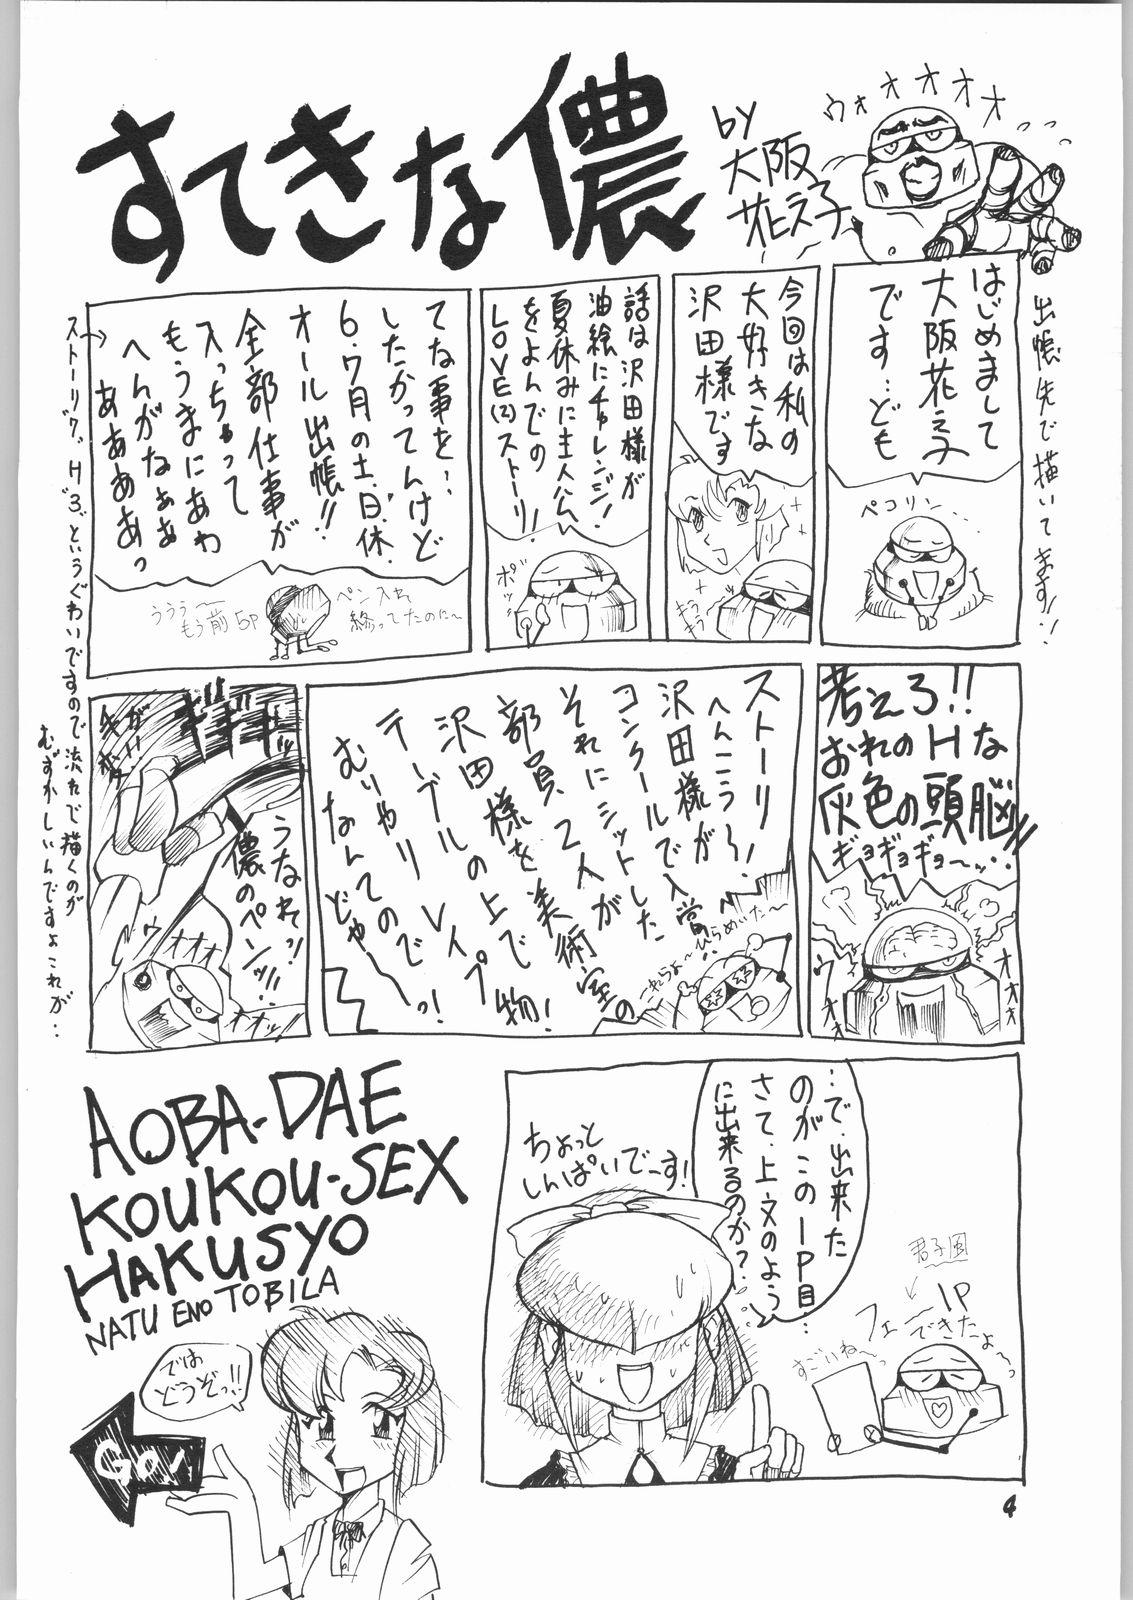 Red natsu eno tobira - True love story Romance - Page 3